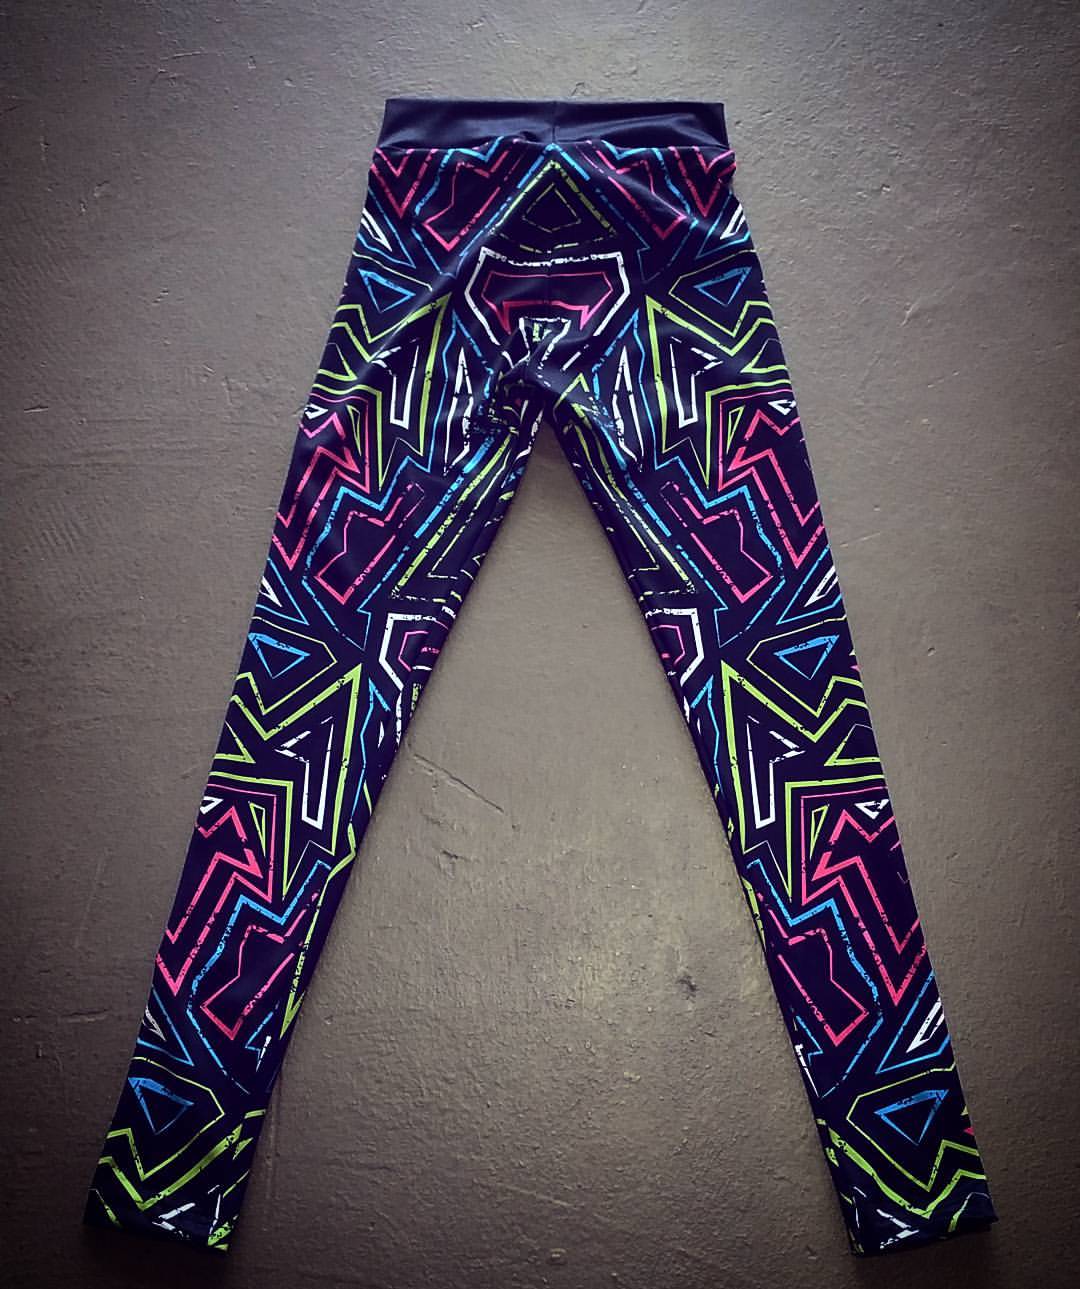 Comfortable sublimation jogger pants featuring custom prints